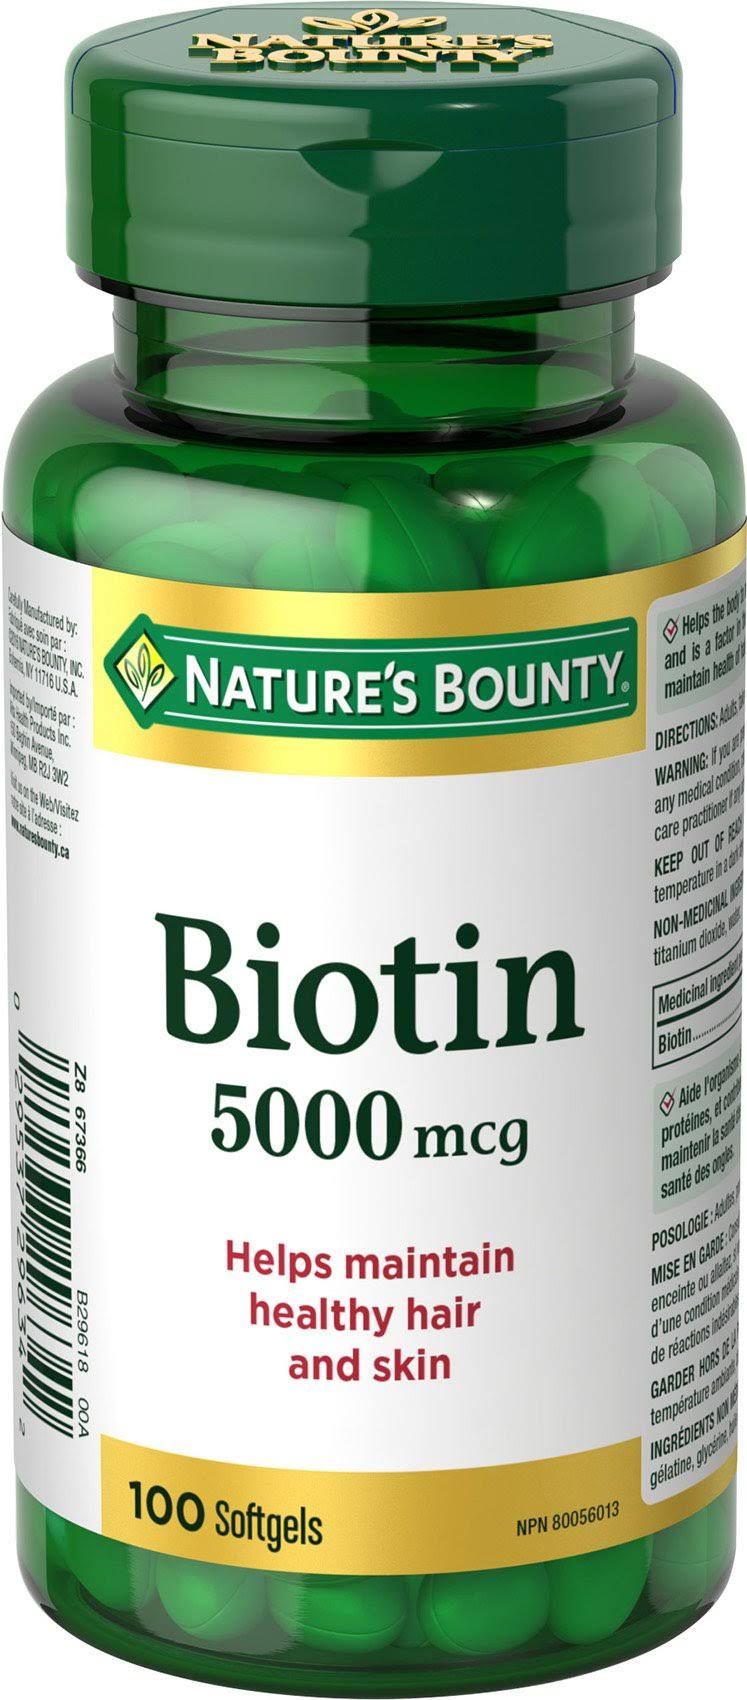 Nature's Bounty Biotin Supplement - 5000mcg, 100 Softgels